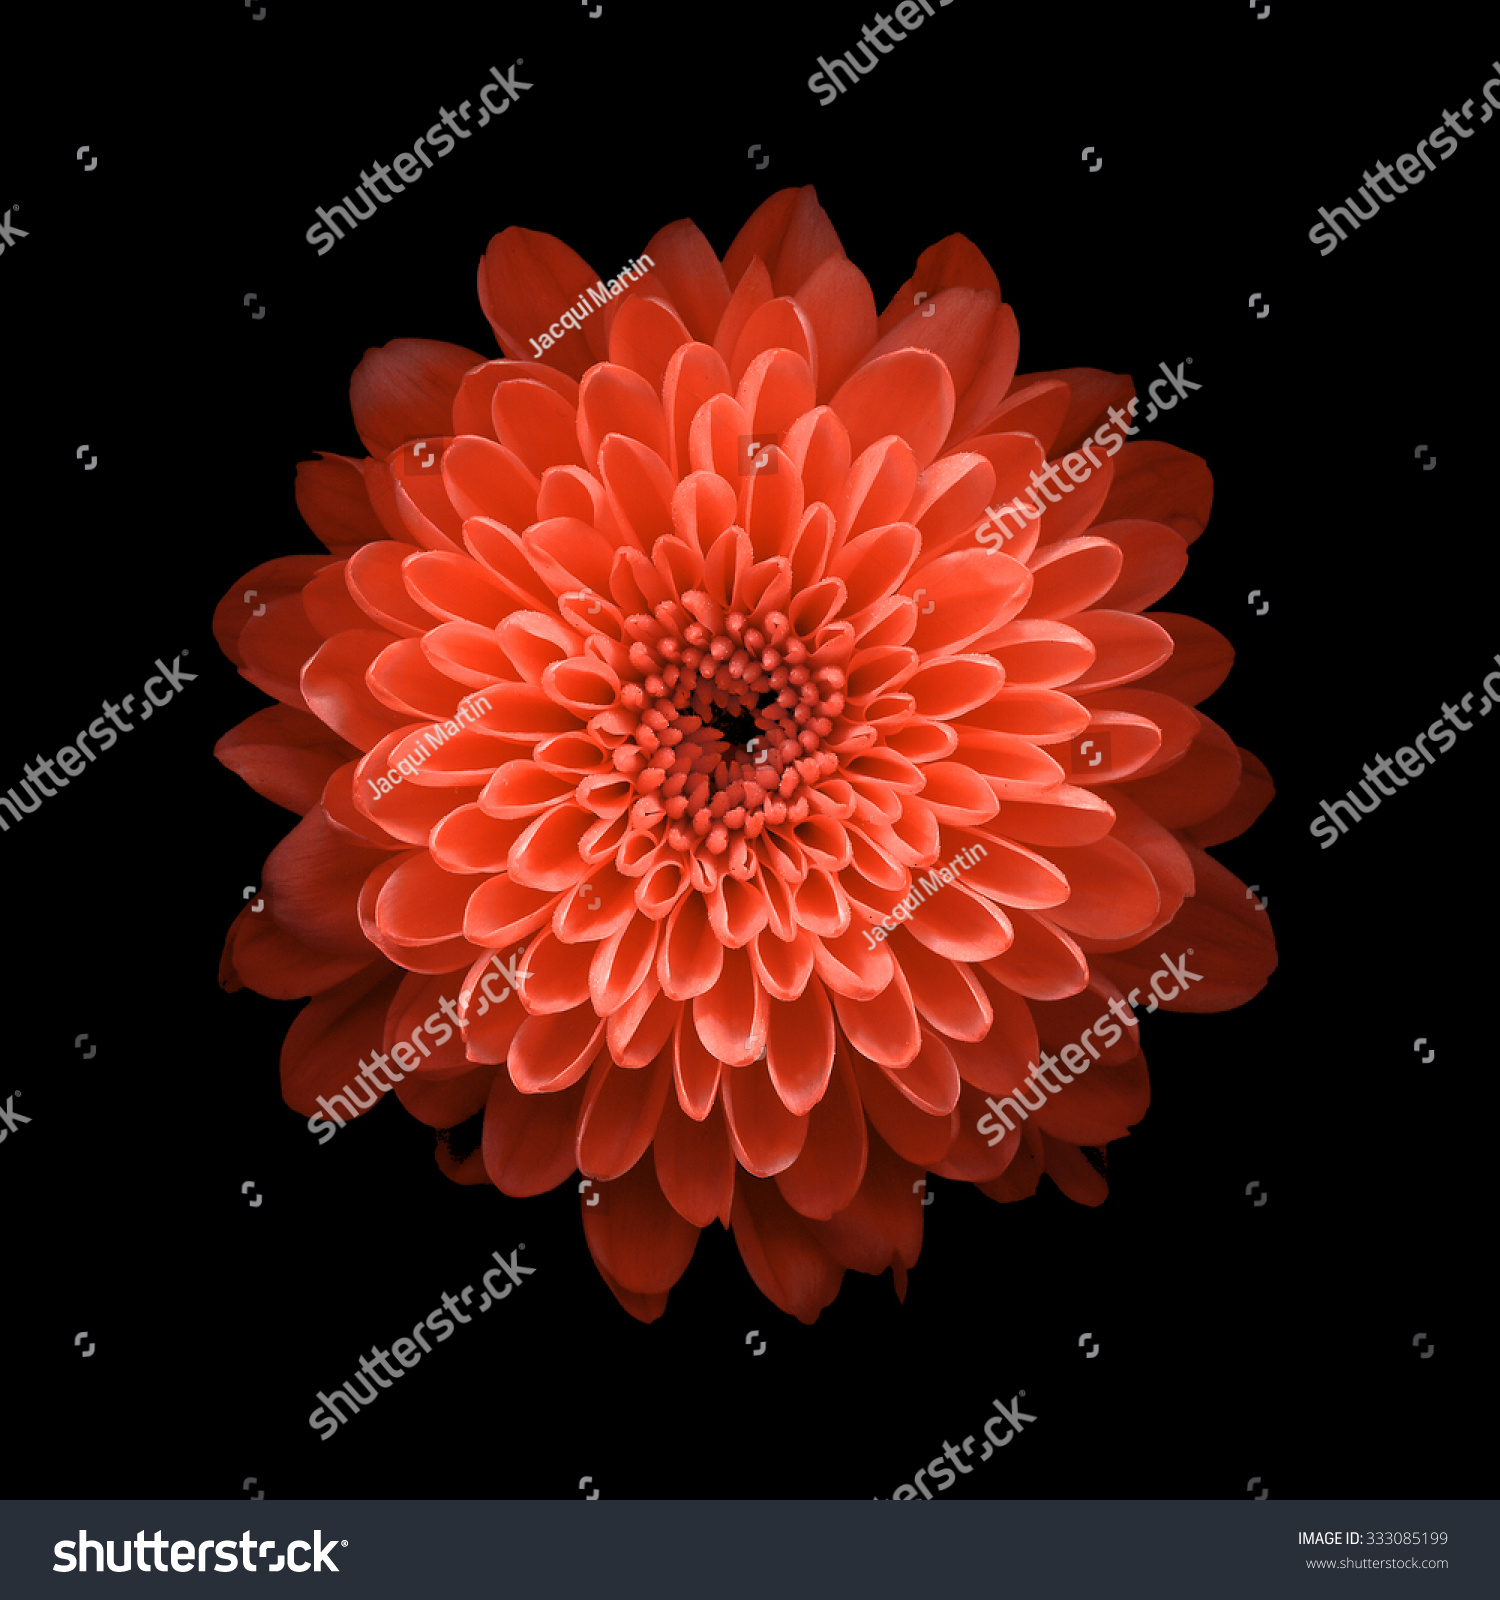 Chrysanthemum on black background #333085199